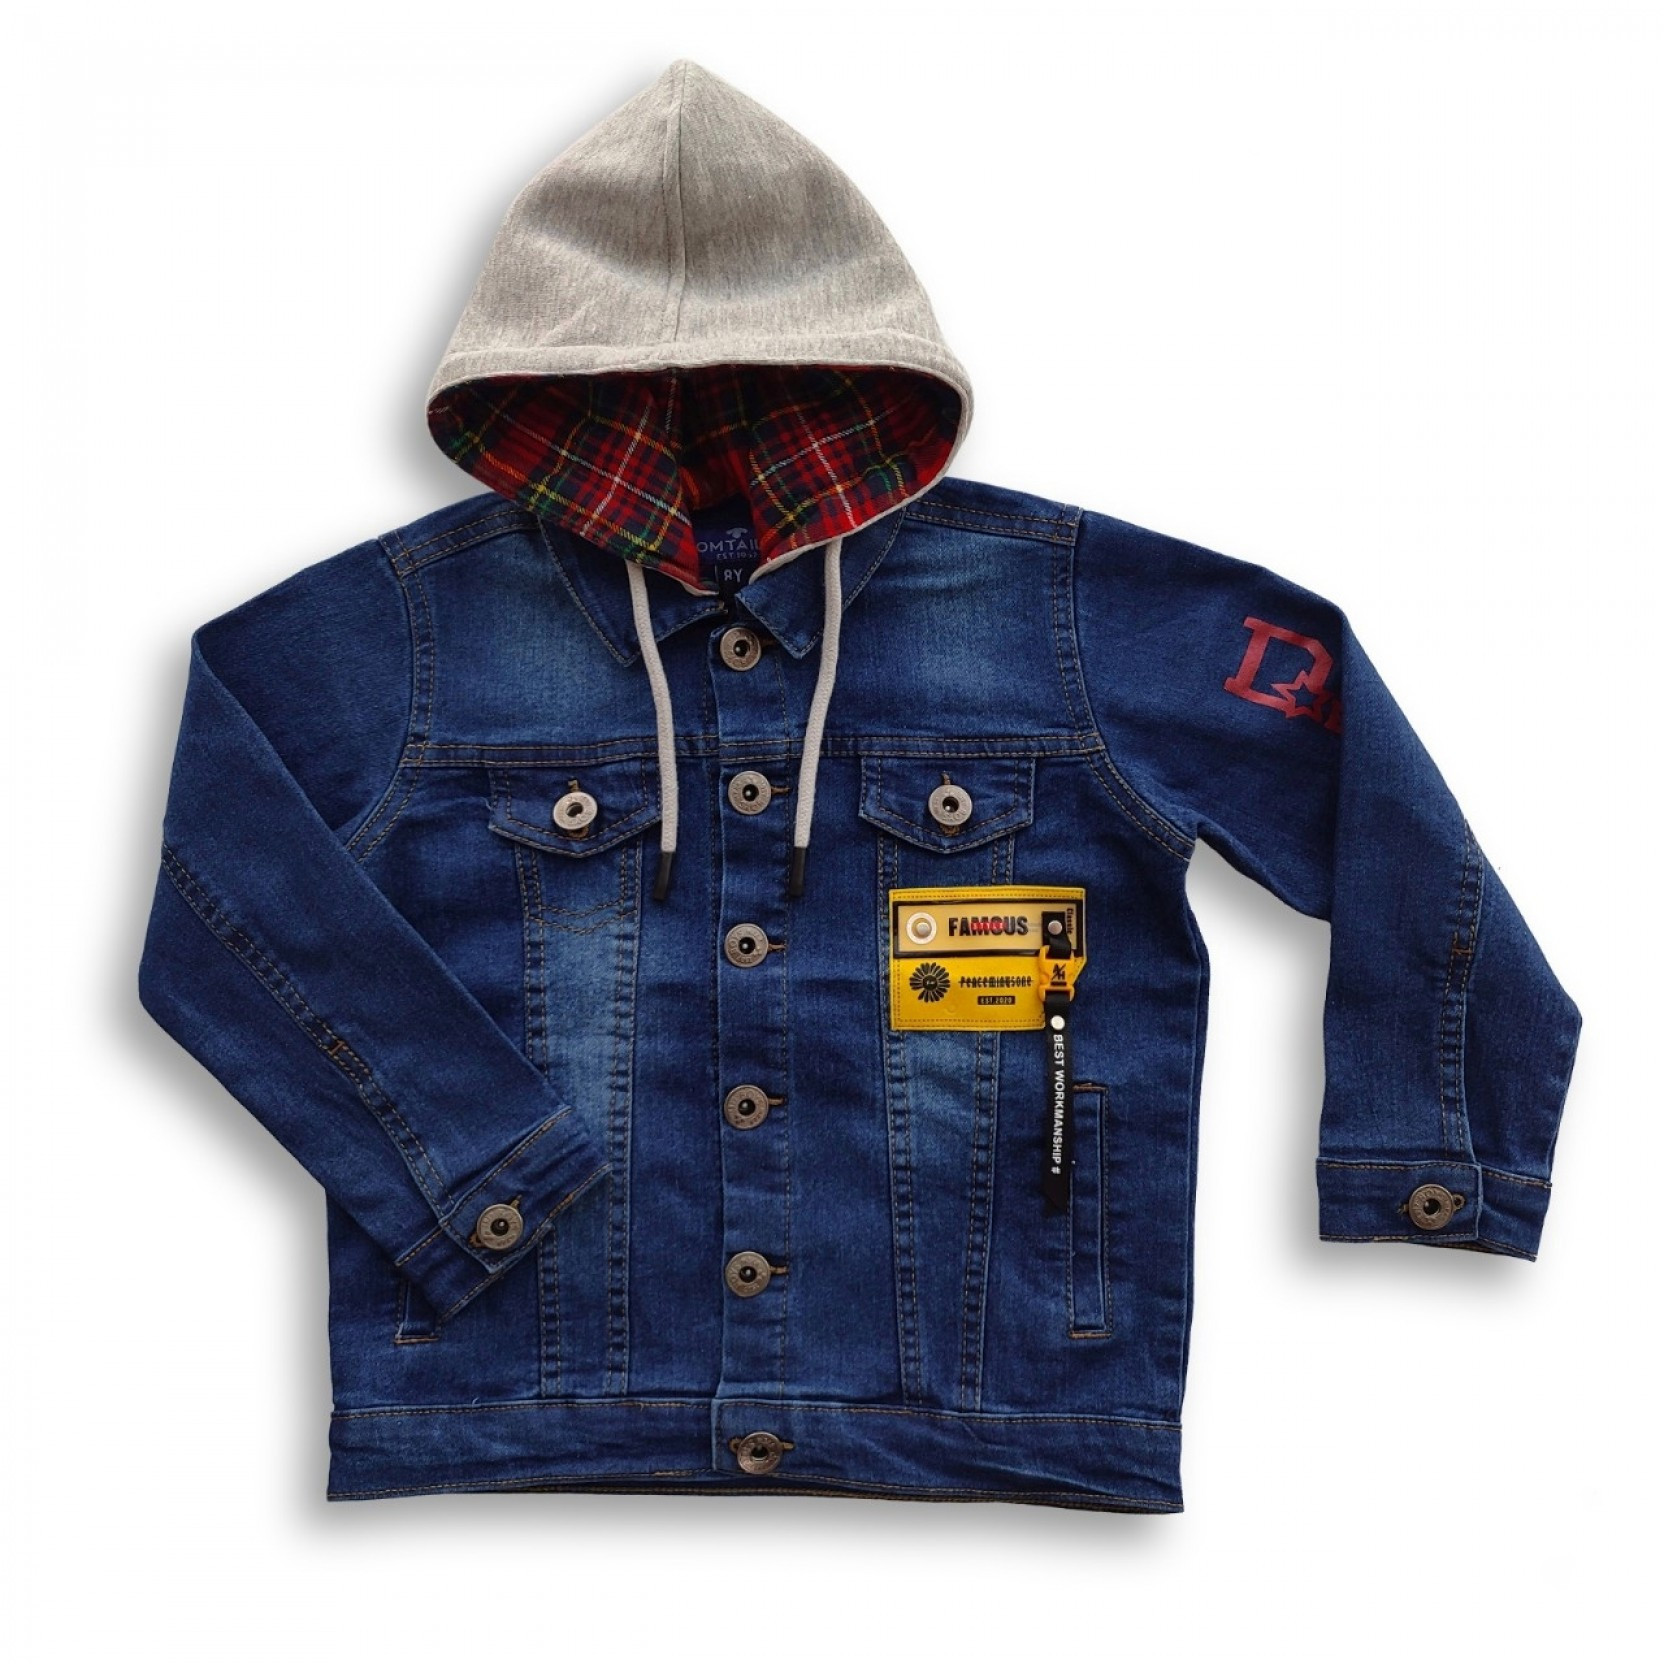 URMAGIC Toddler Baby Boy Shirt Denim Jacket Coat Outwear Fall Outfit  Clothes 18 Months- 6 Years - Walmart.com